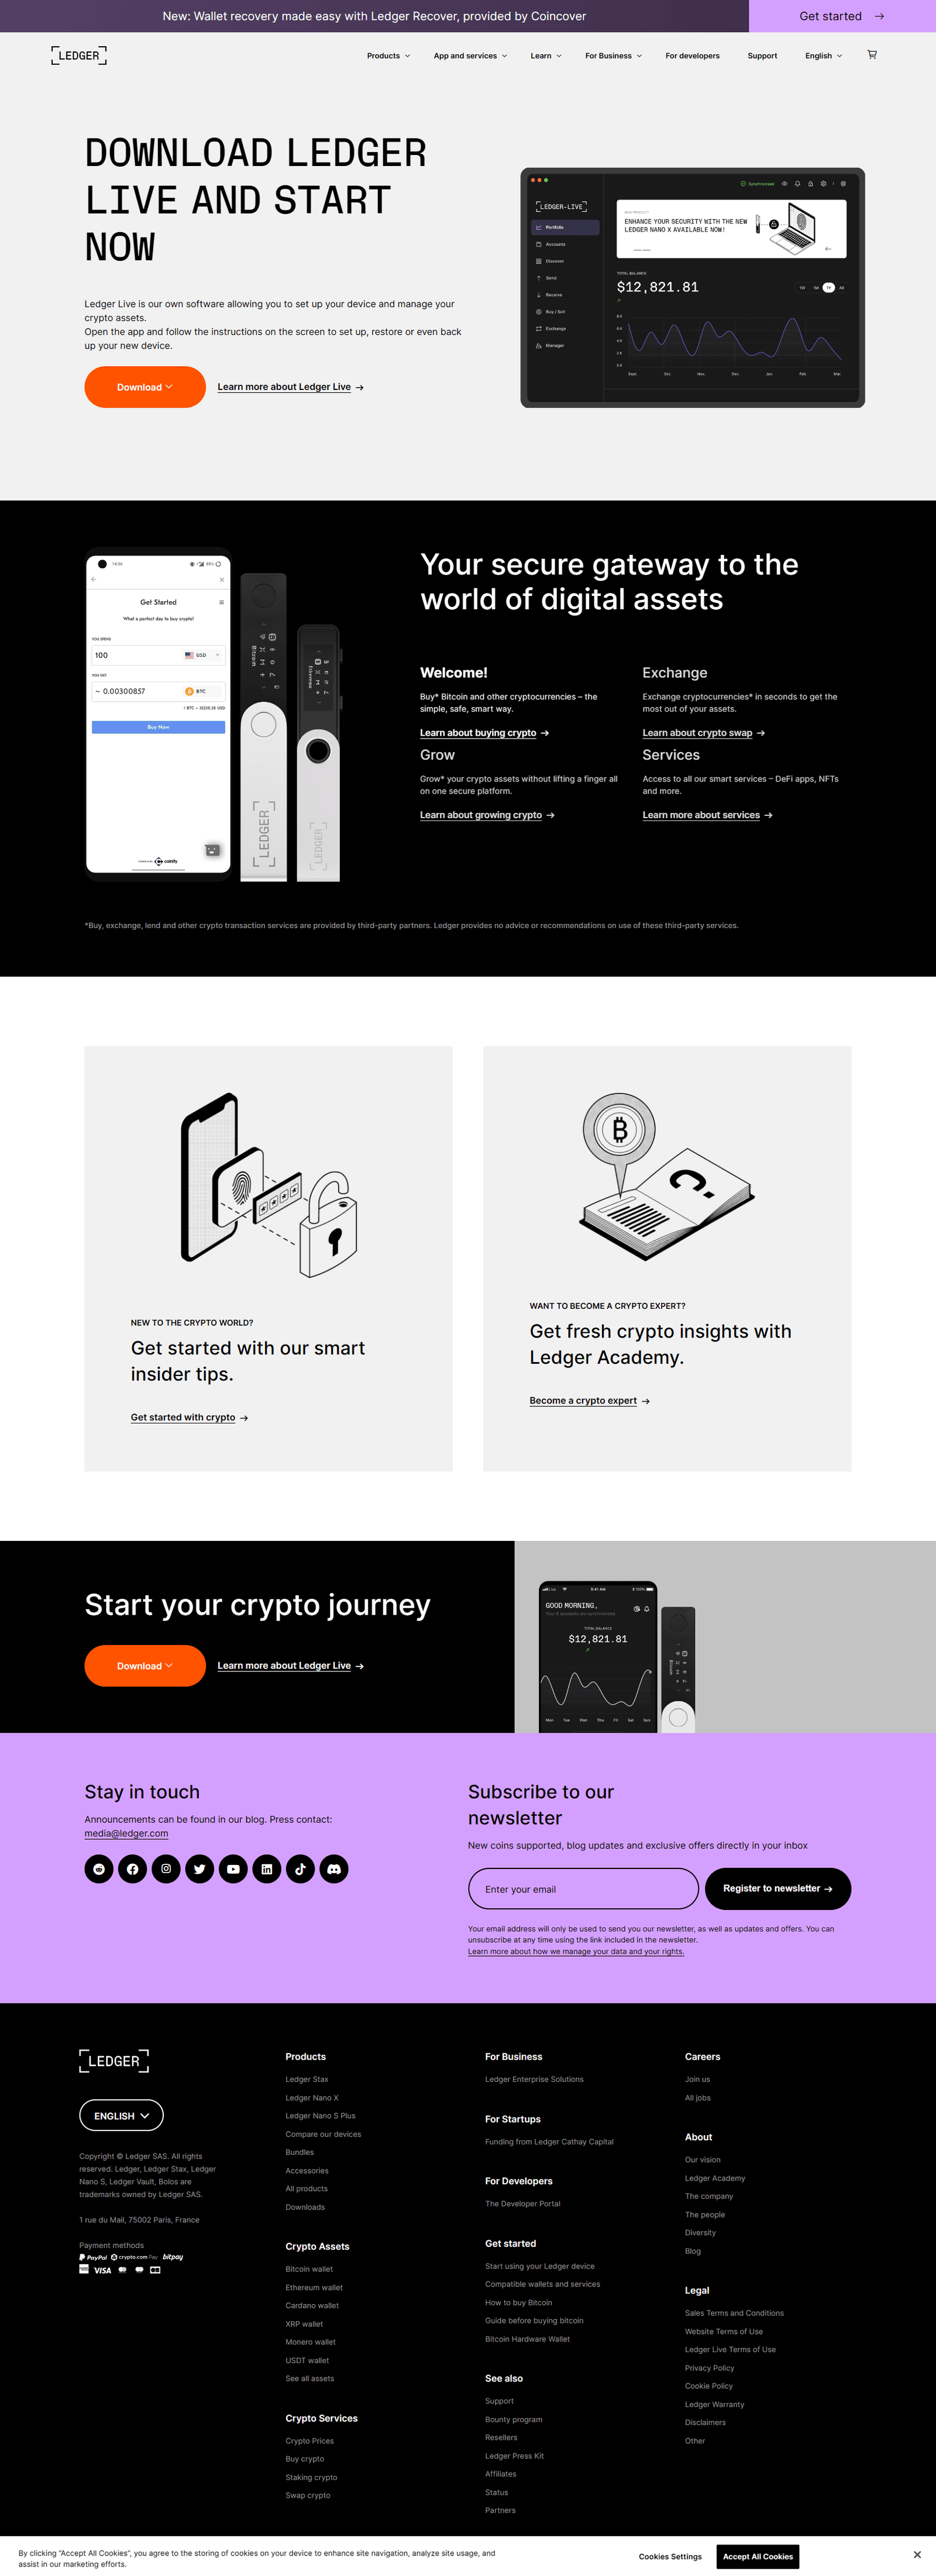 Official Site® | Ledger.com/Start® - Getting started